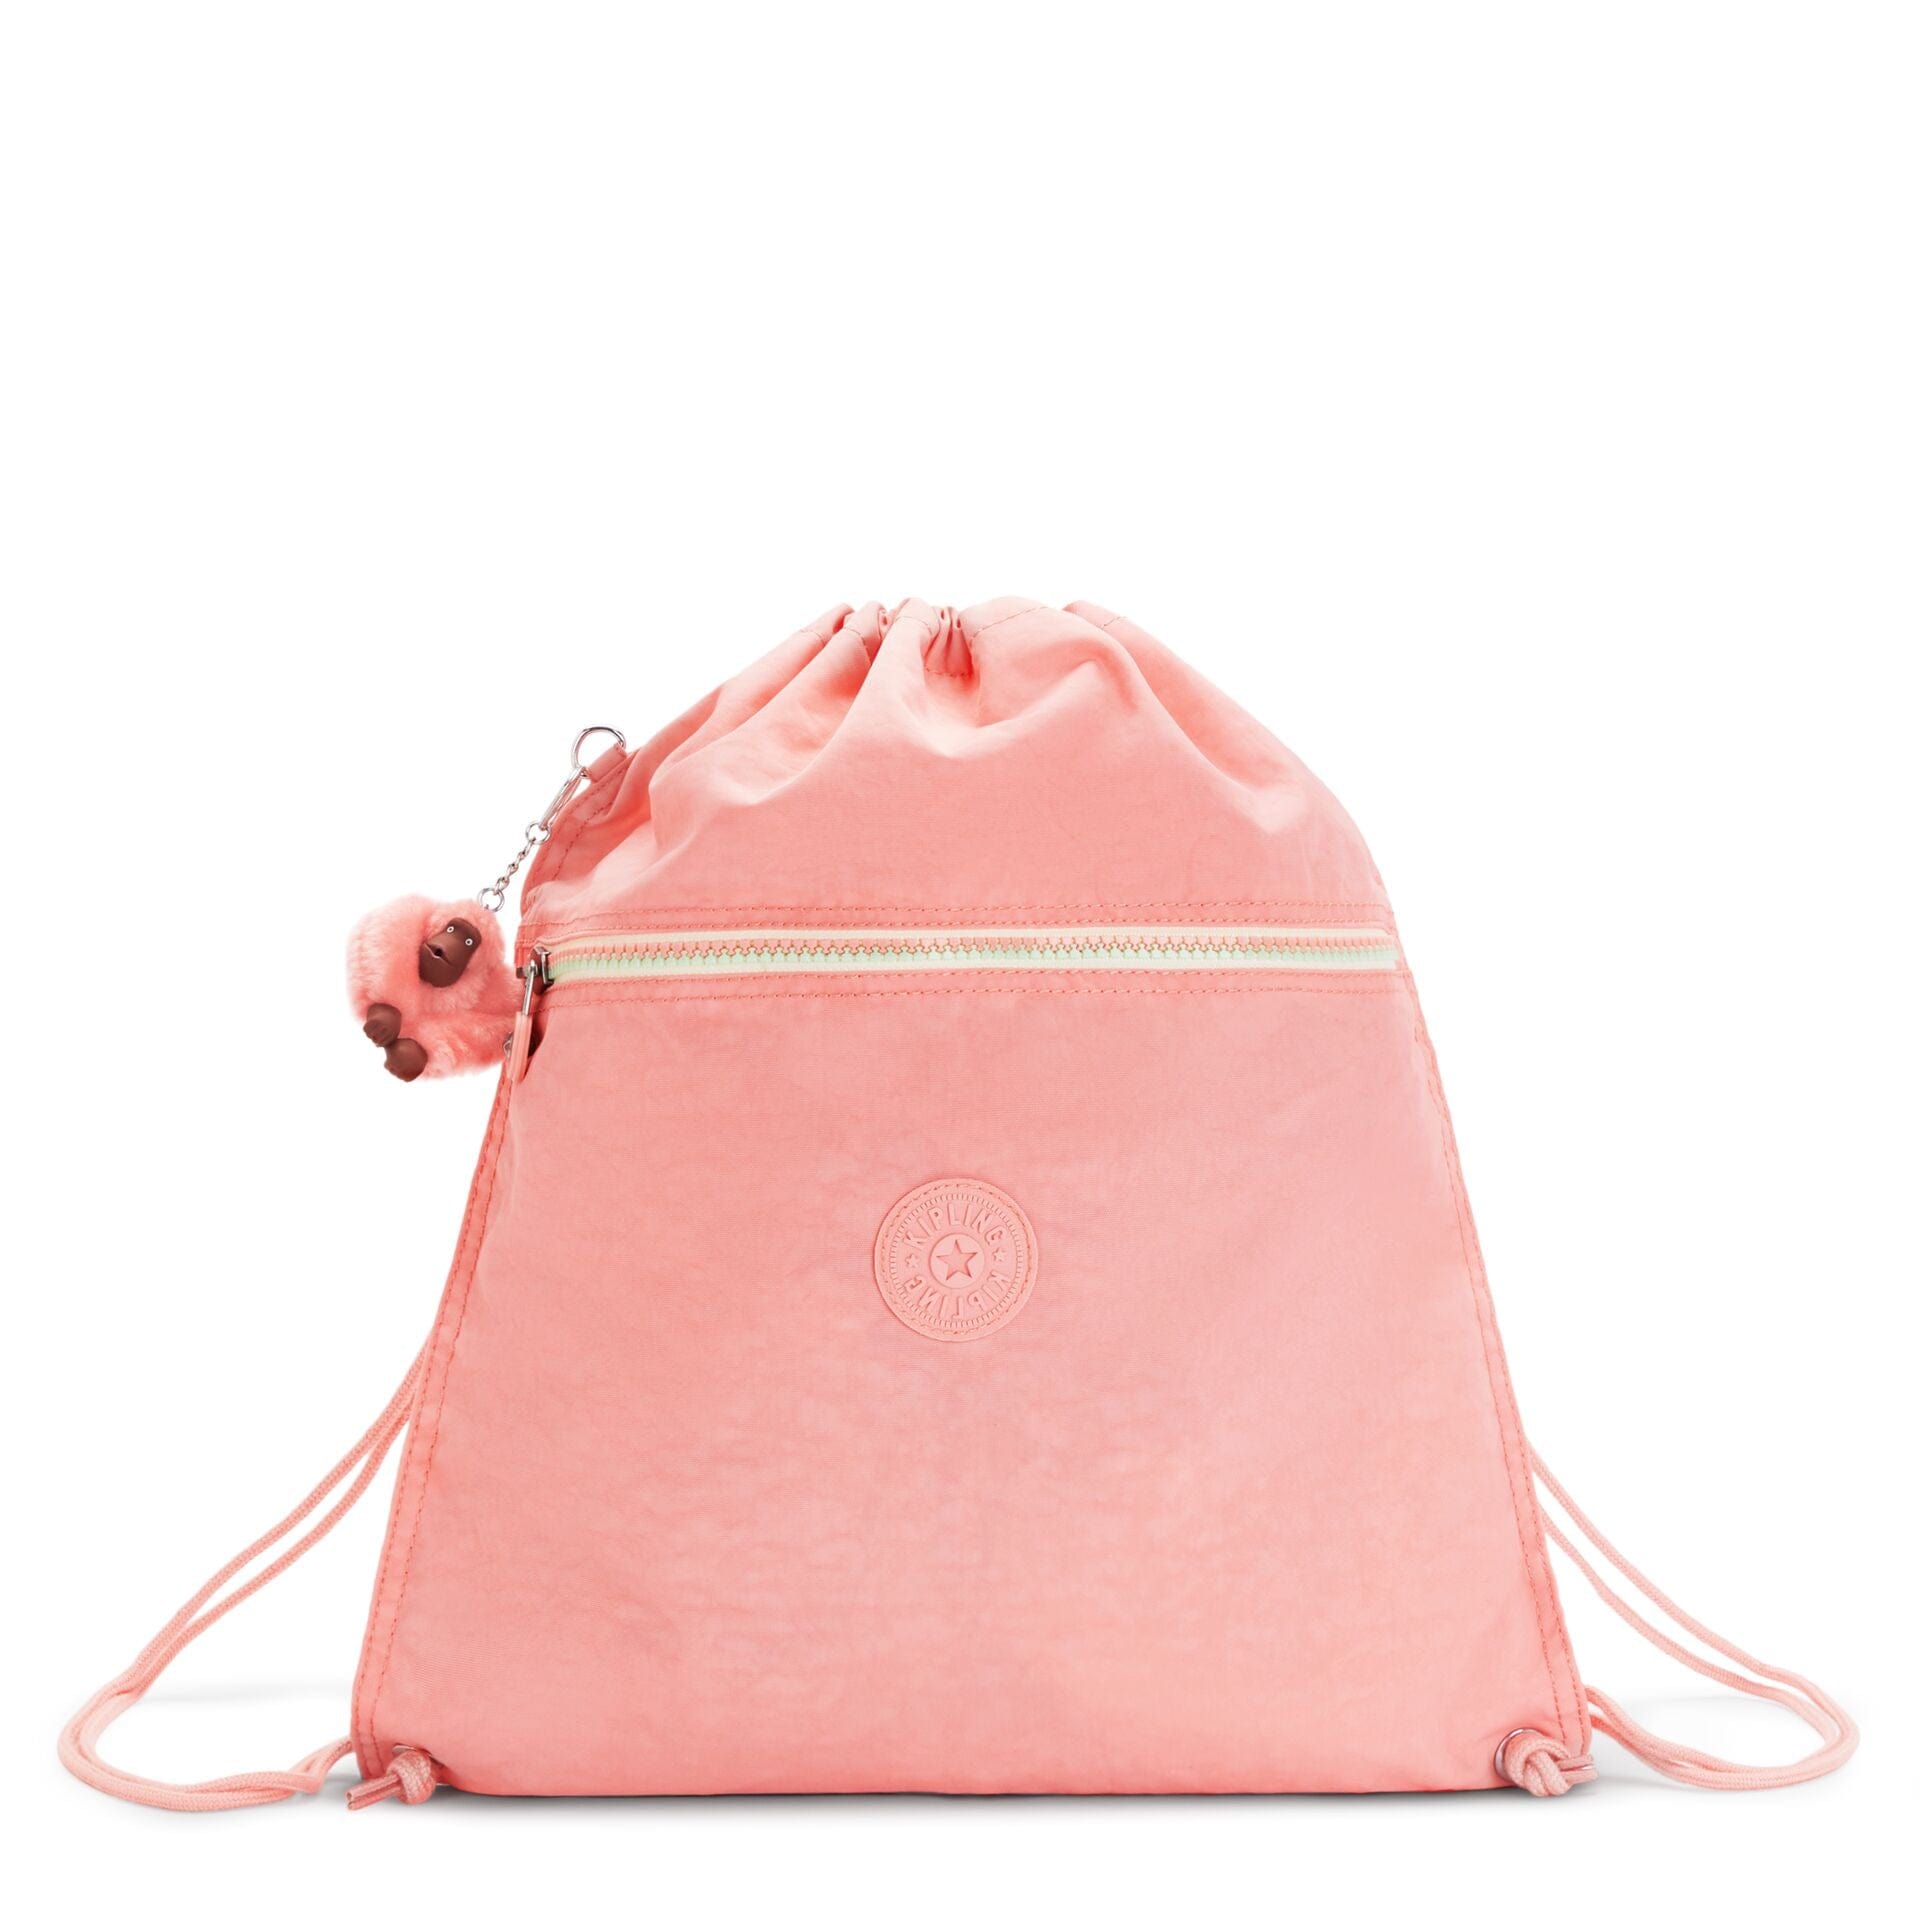 KIPLING-Supertaboo-Medium backpack (with drawstring)-Pink Candy C-09487-R36